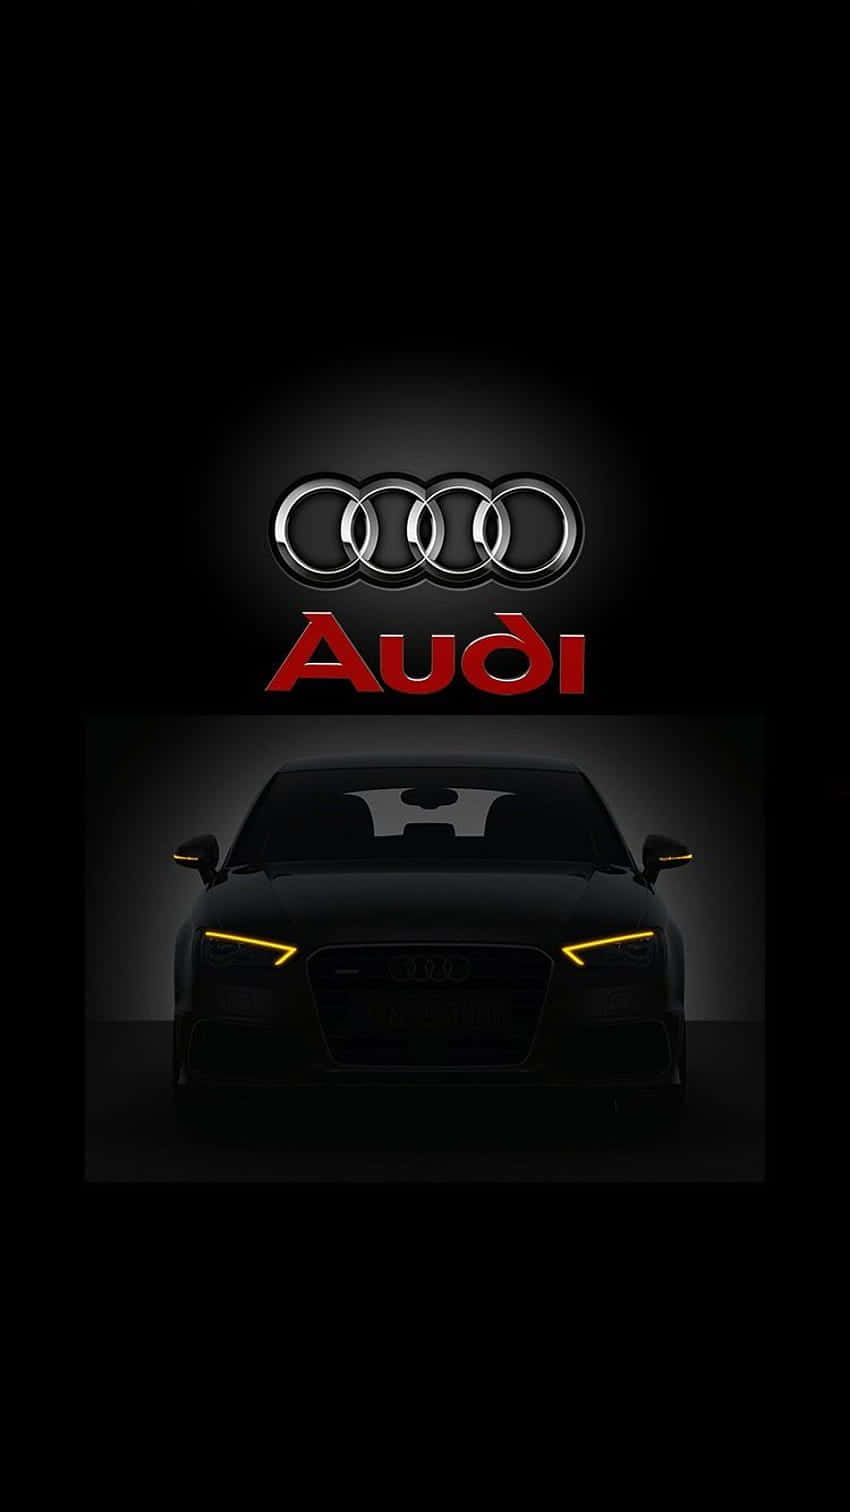 Audi on impressive nighttime landscape